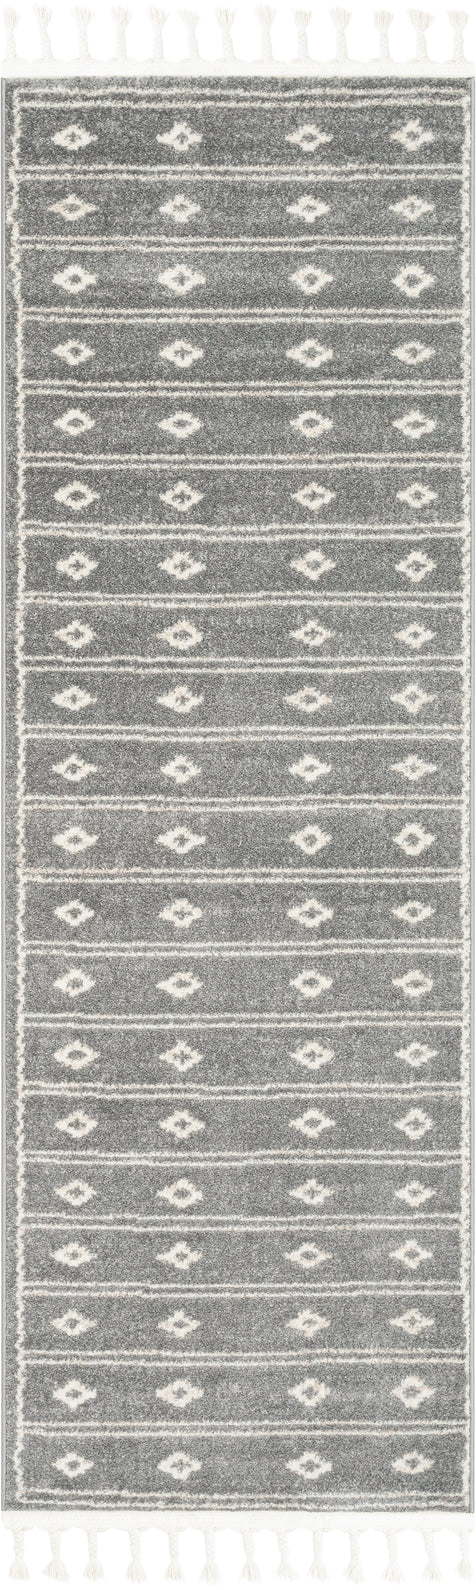 Parallel Moroccan Tribal Diamond Pattern Grey Rug